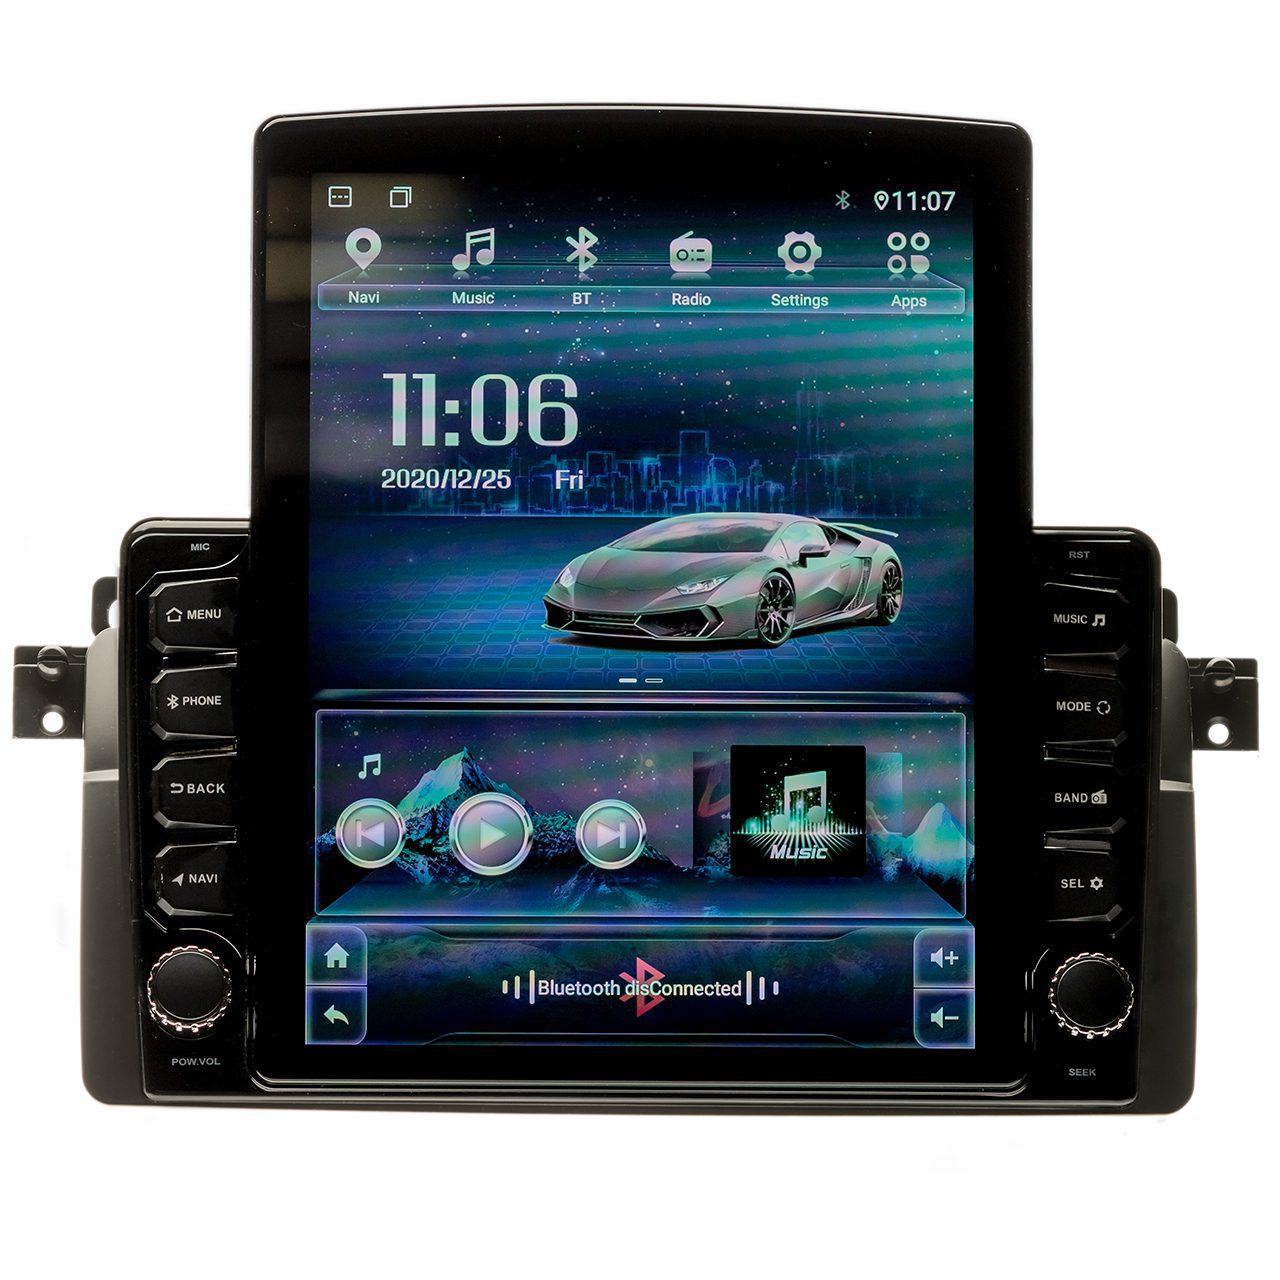 Navigatie AUTONAV Android GPS Dedicata BMW E46, Model XPERT Memorie 128GB Stocare, 6GB DDR3 RAM, Butoane Si Volum Fizice, Display Vertical Stil Tesla 10